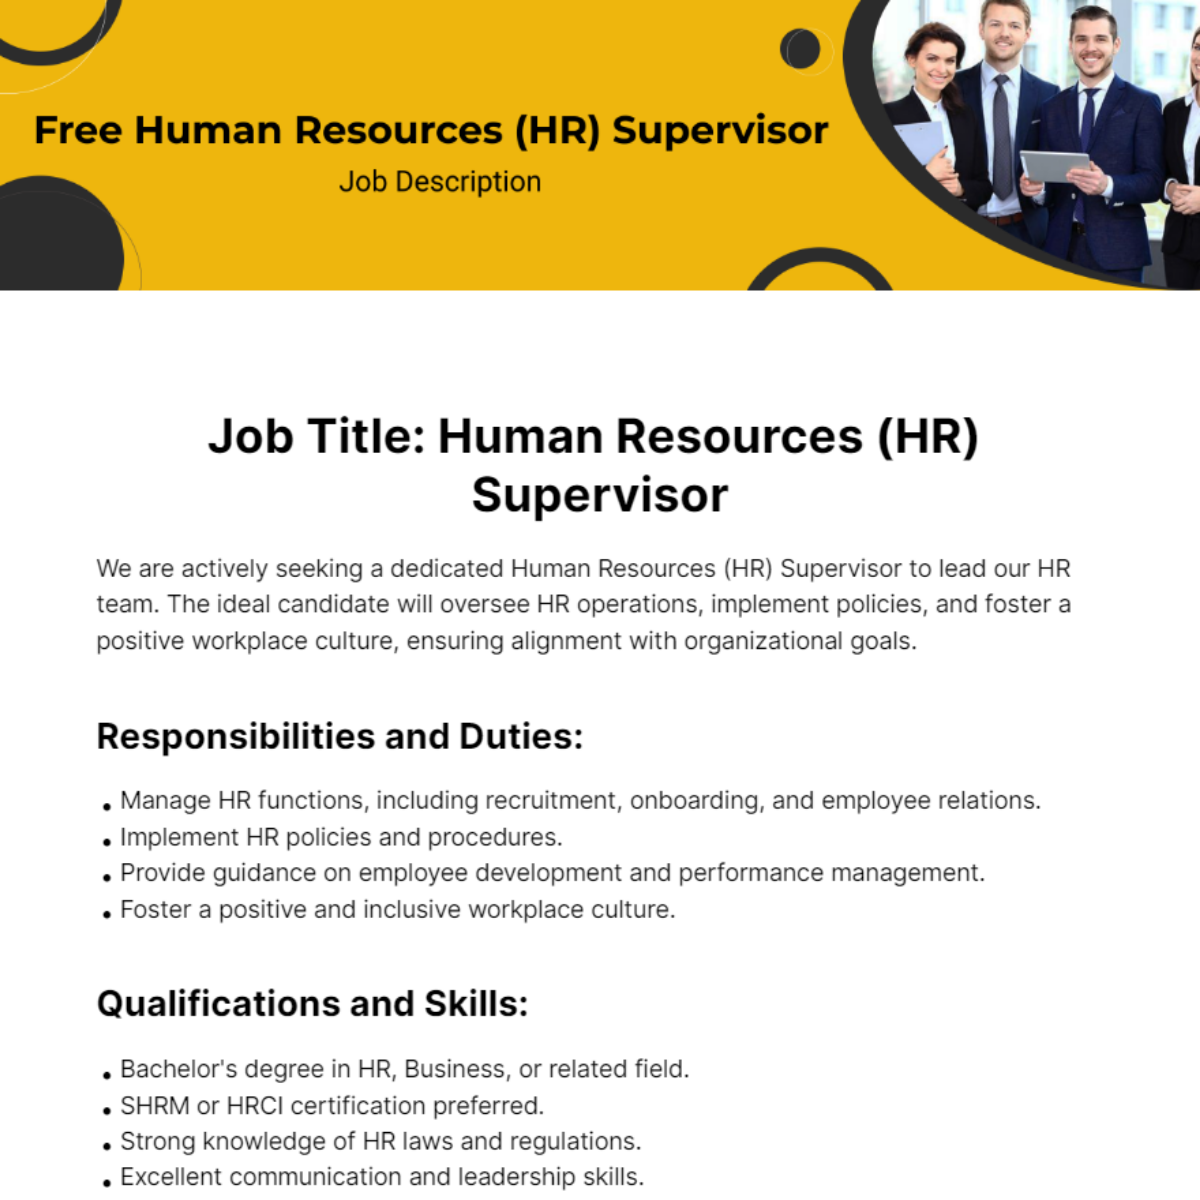 Human Resources (HR) Supervisor Job Description Template